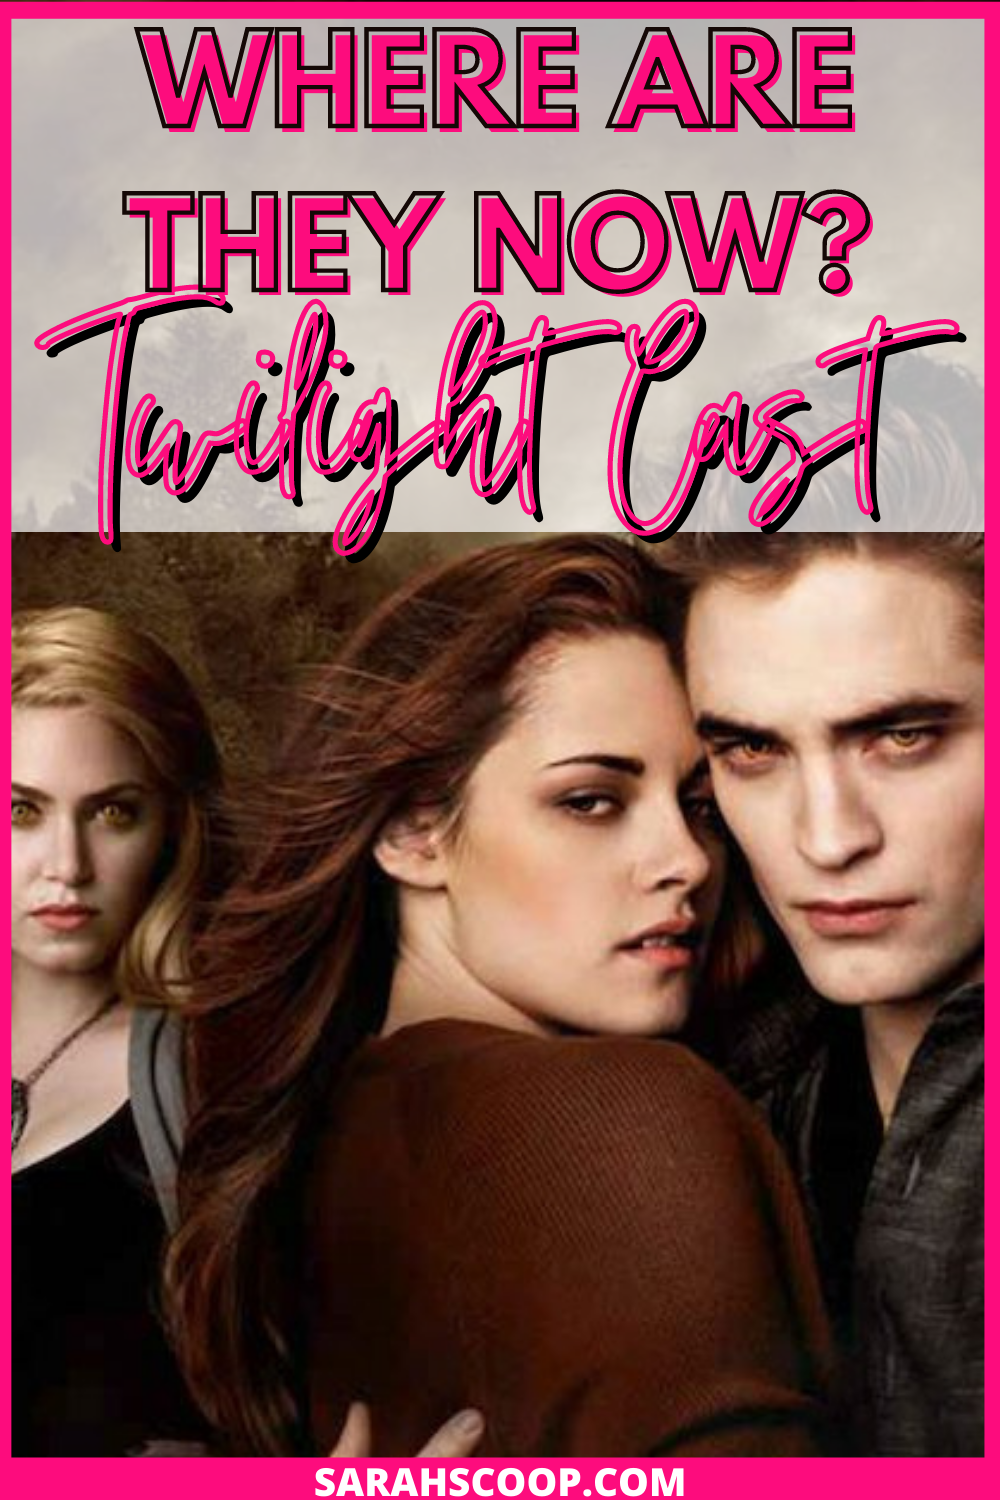 Of twilight cast the ‘Twilight’ cast: